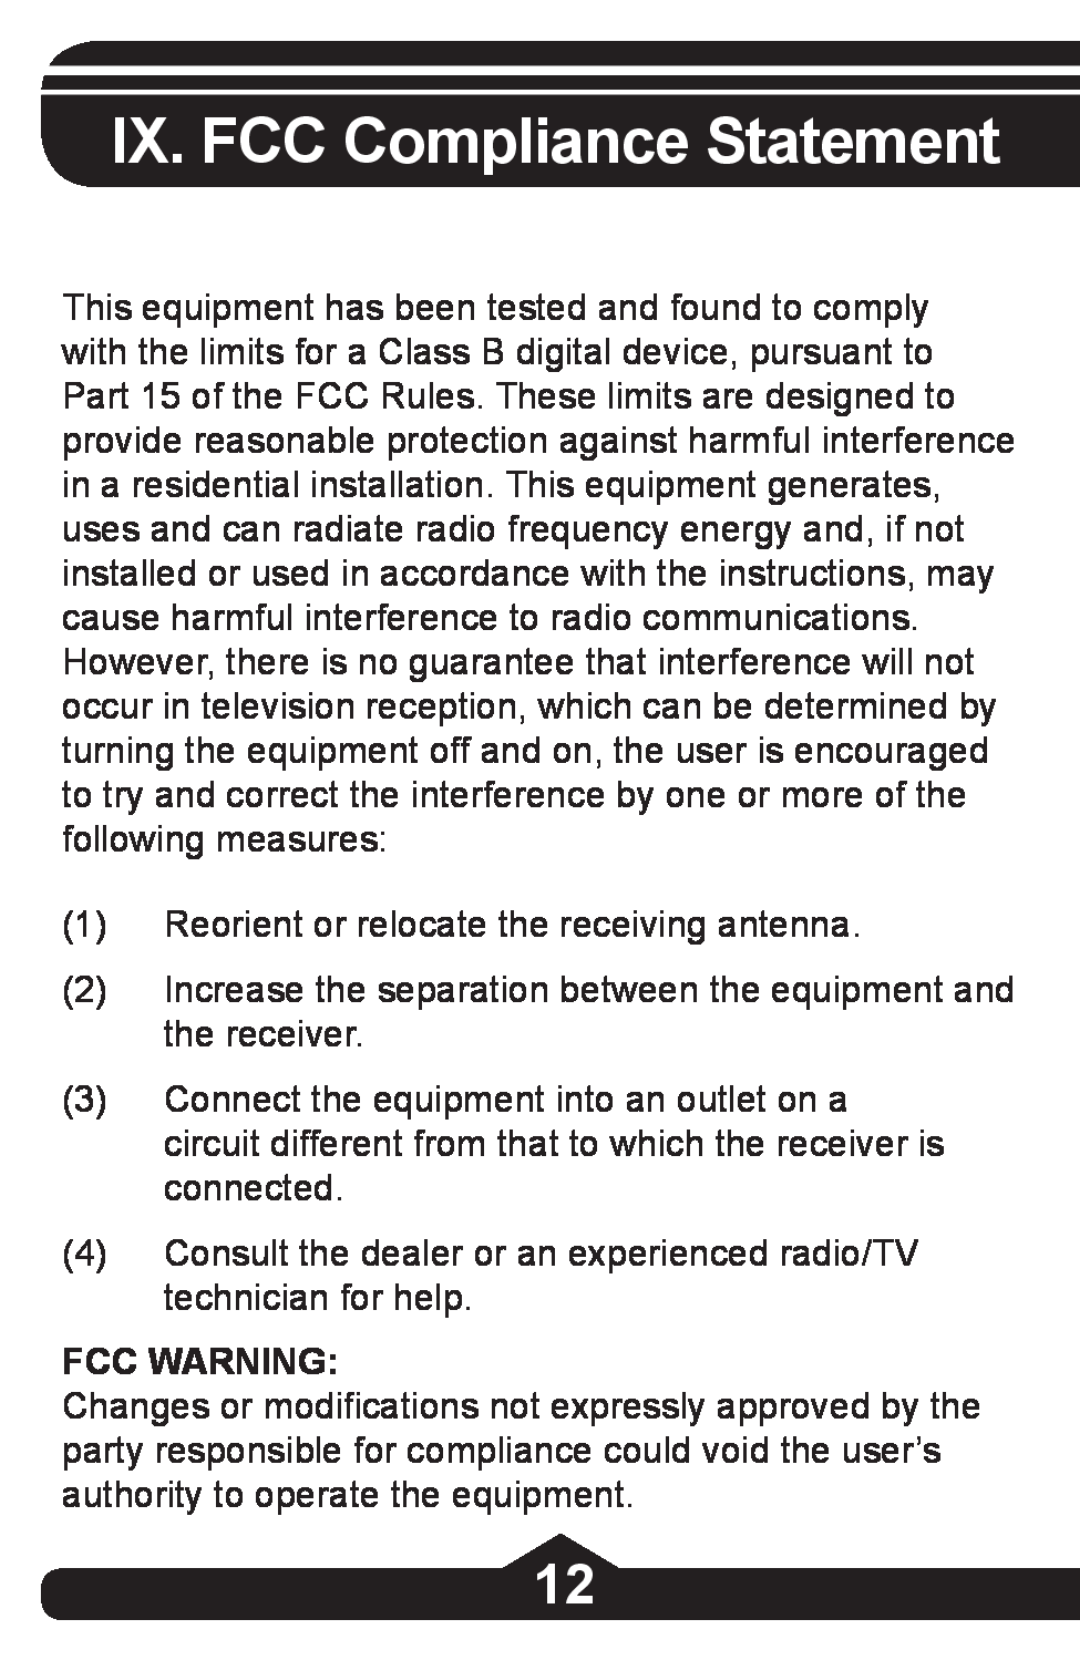 Jasco HO97844 instruction manual IX. FCC Compliance Statement, Fcc Warning 